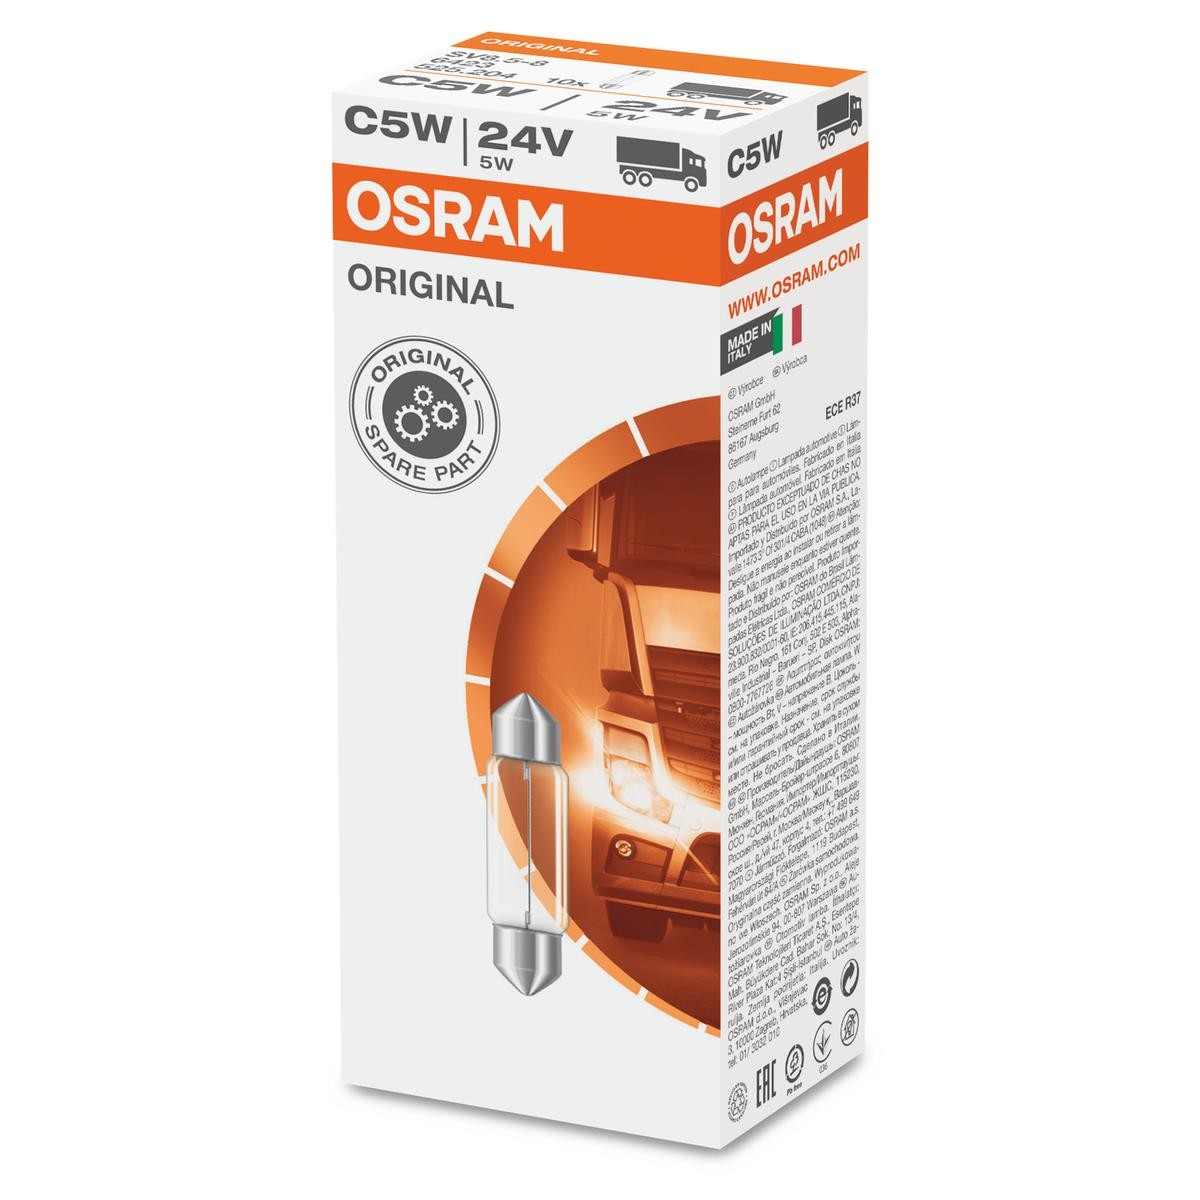 C5W OSRAM ORIGINAL LINE 24V 5W, C5W, SV8.5-8 Bulb, licence plate light 6423 buy